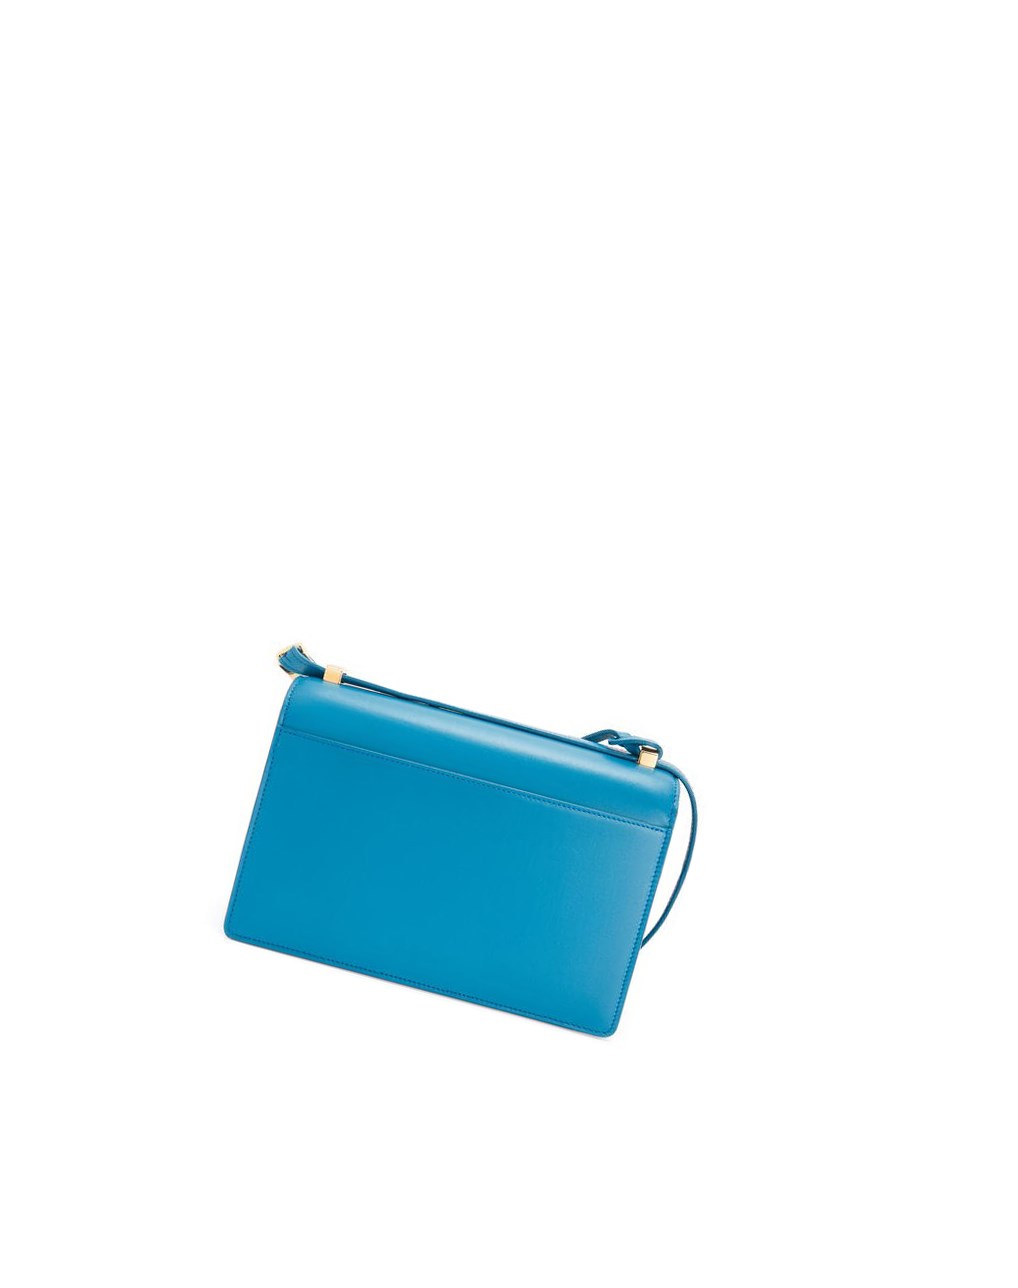 Loewe Barcelona bag in silk calfskin Lagoon Blue | EB1248957